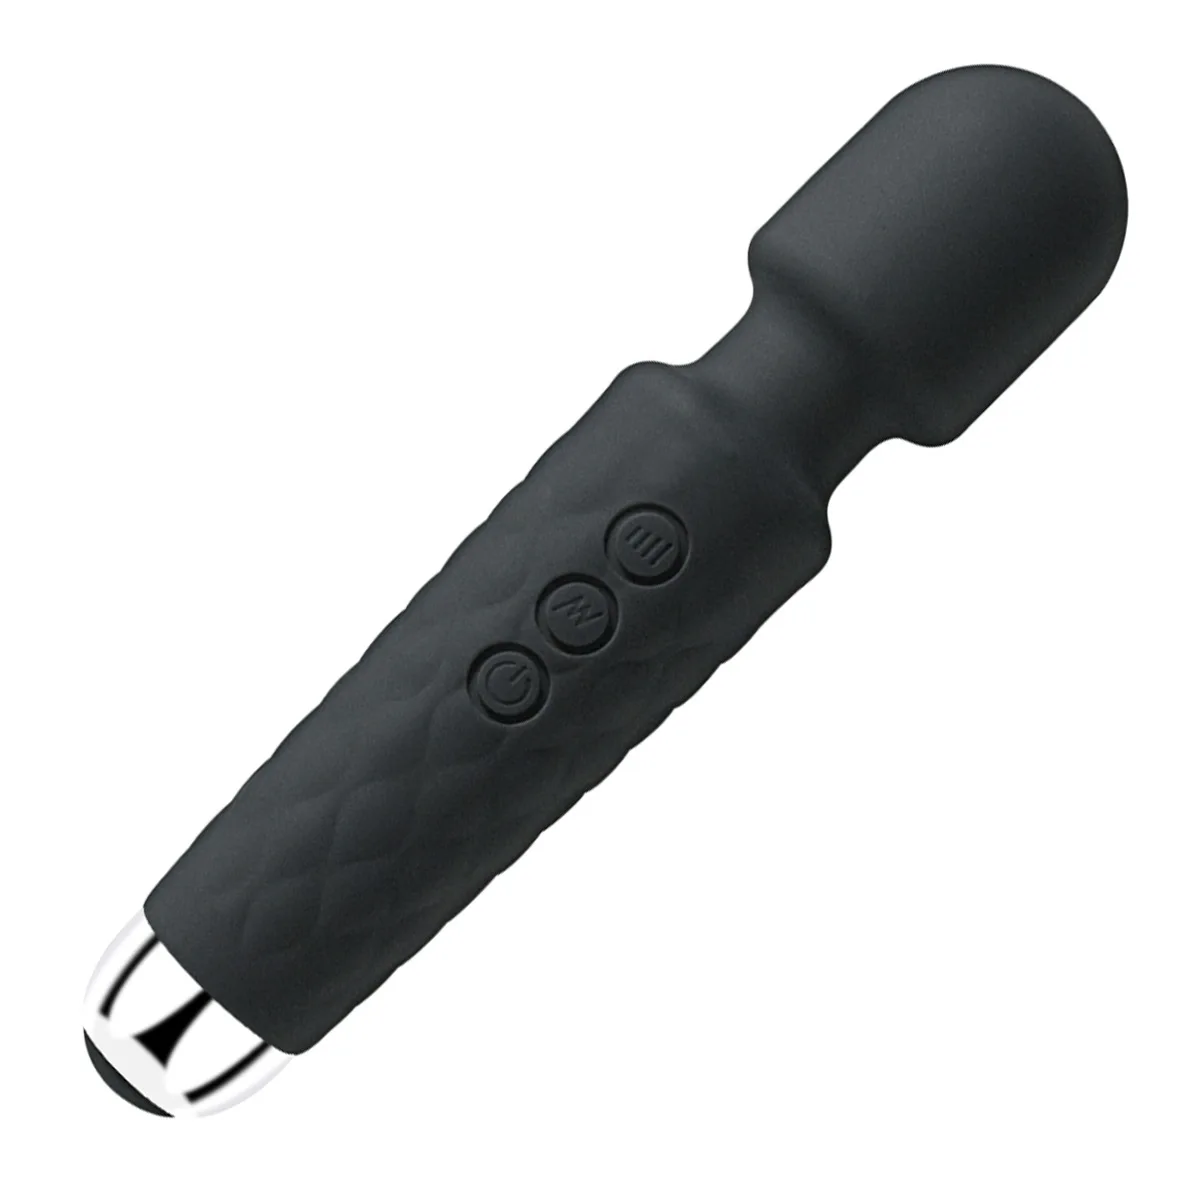 Silicone mini rechargeable womens rotating erotic av magic wand massager pussy stimulate wand vibrator sex toy